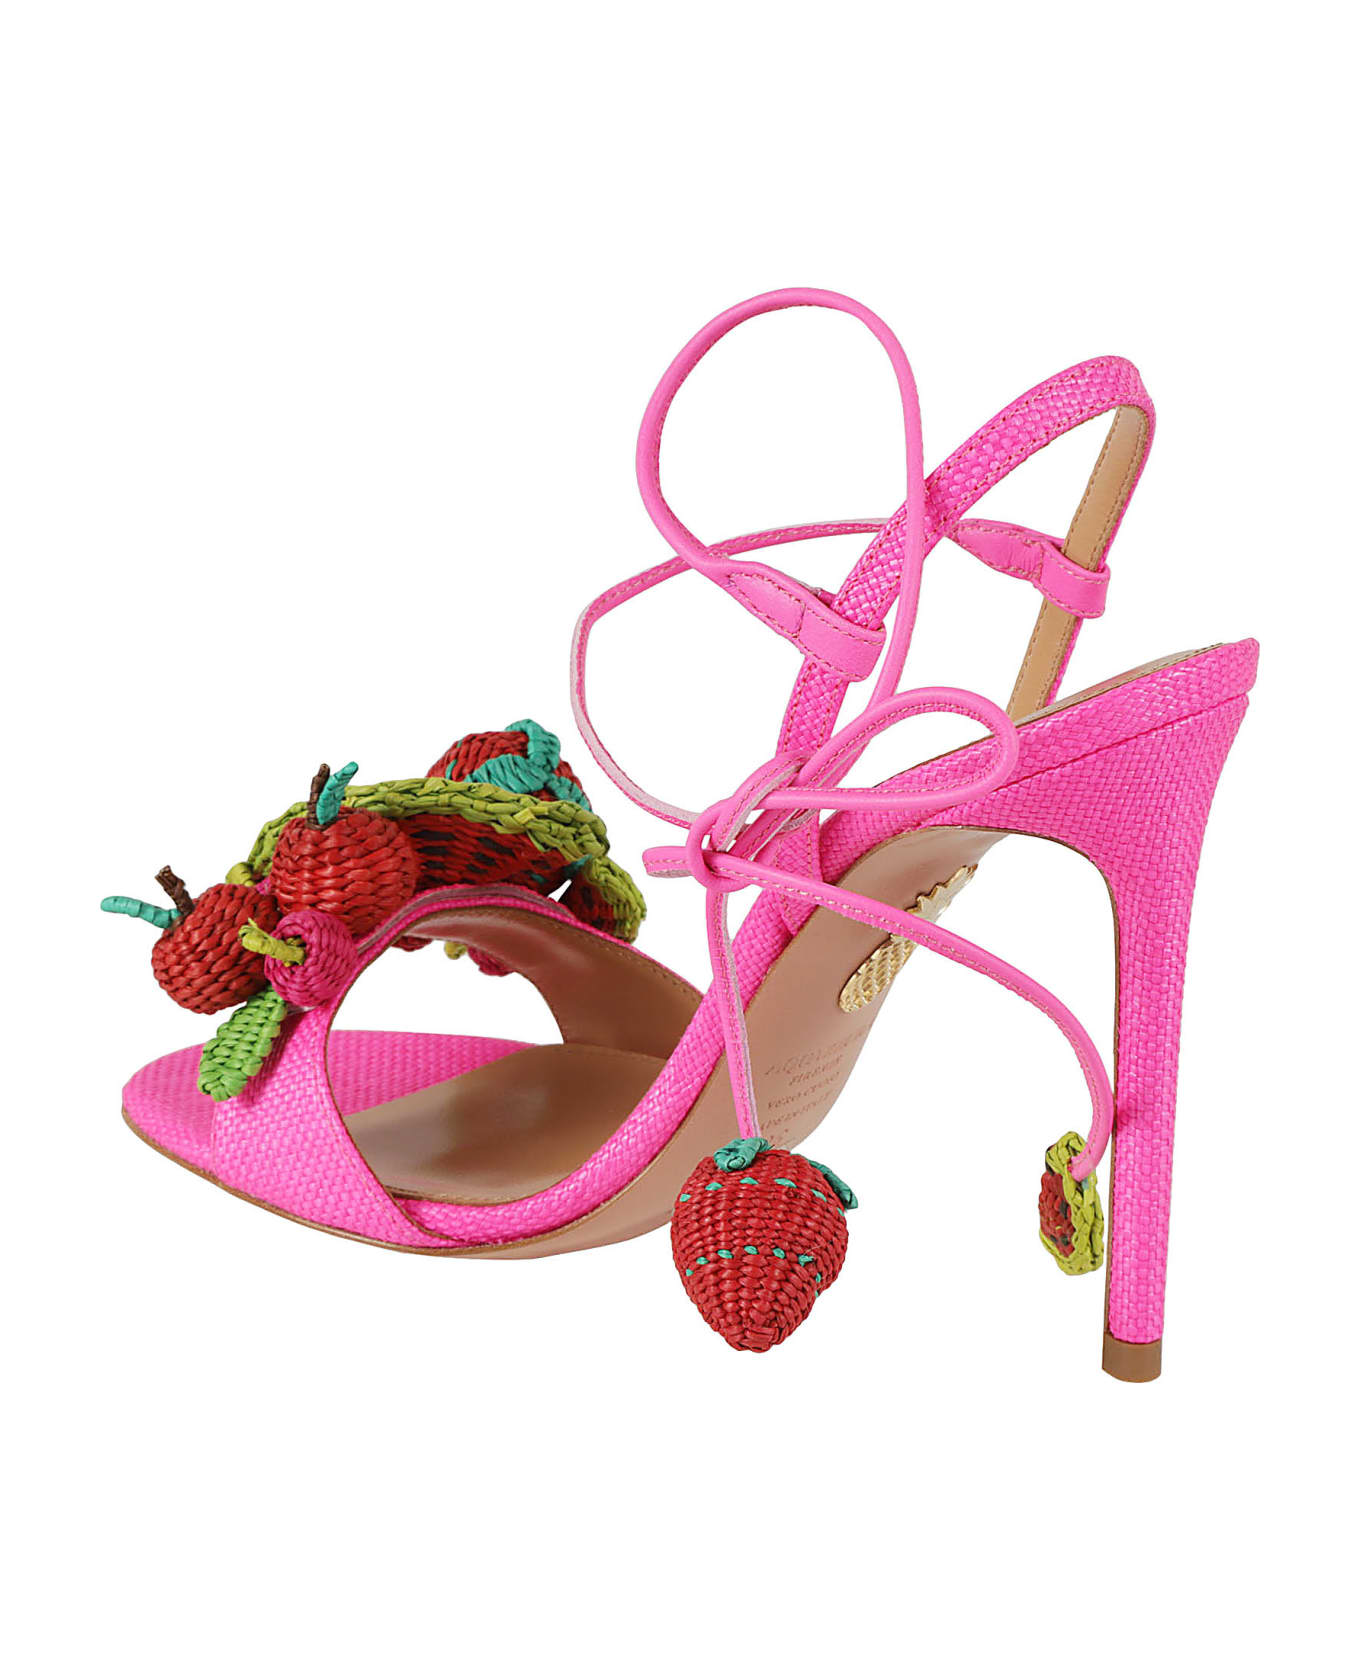 Aquazzura Strawberry Punch Sandals - Ultra Pink サンダル